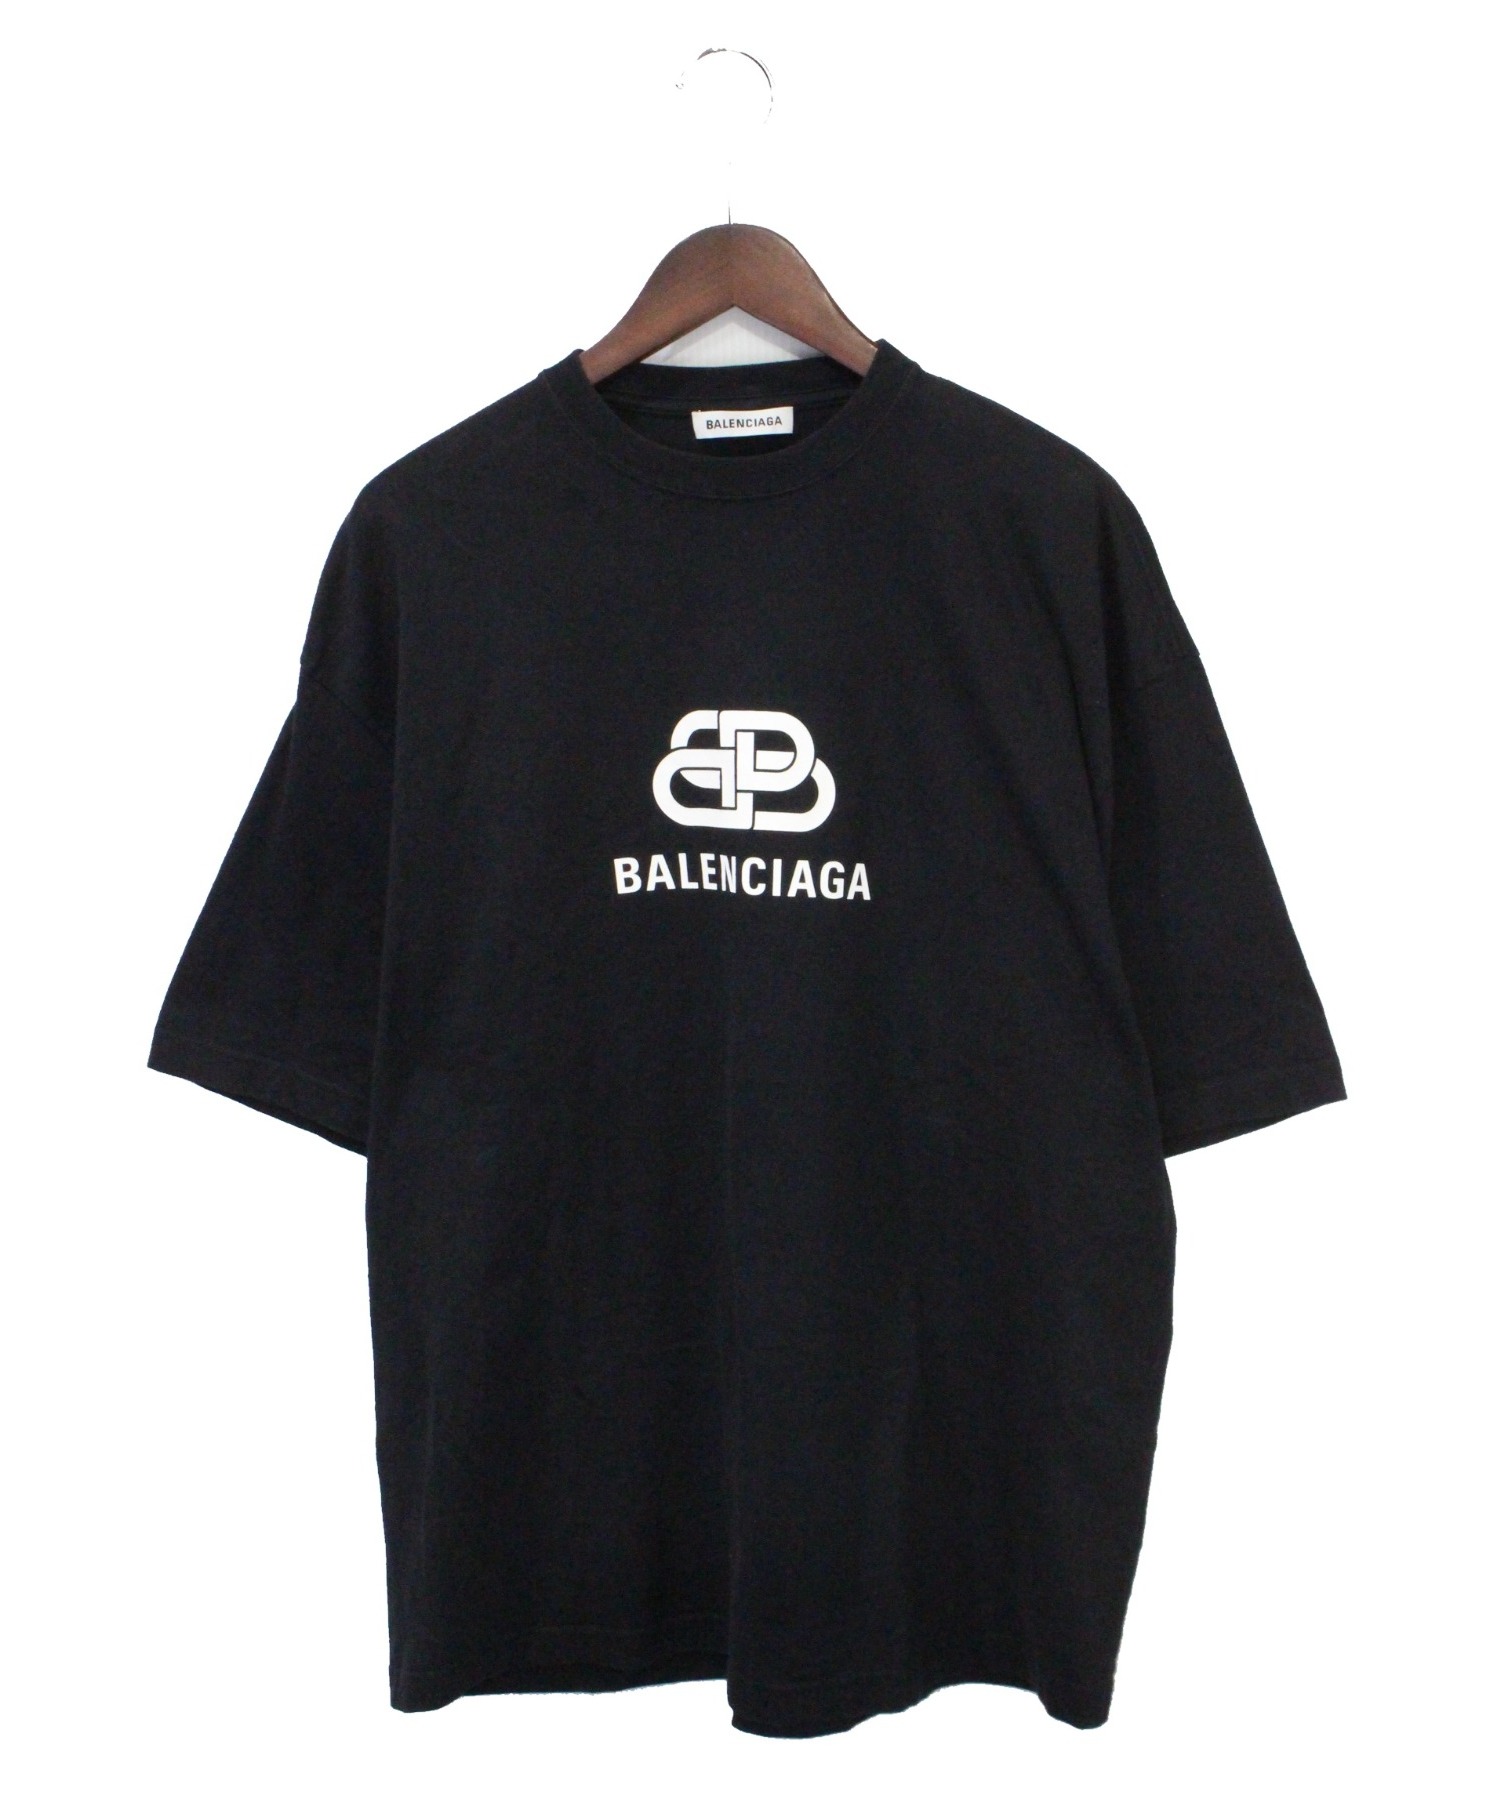 BALENCIAGAバレンシアガロゴオーバーサイズビッグシルエットTシャツ肩幅56